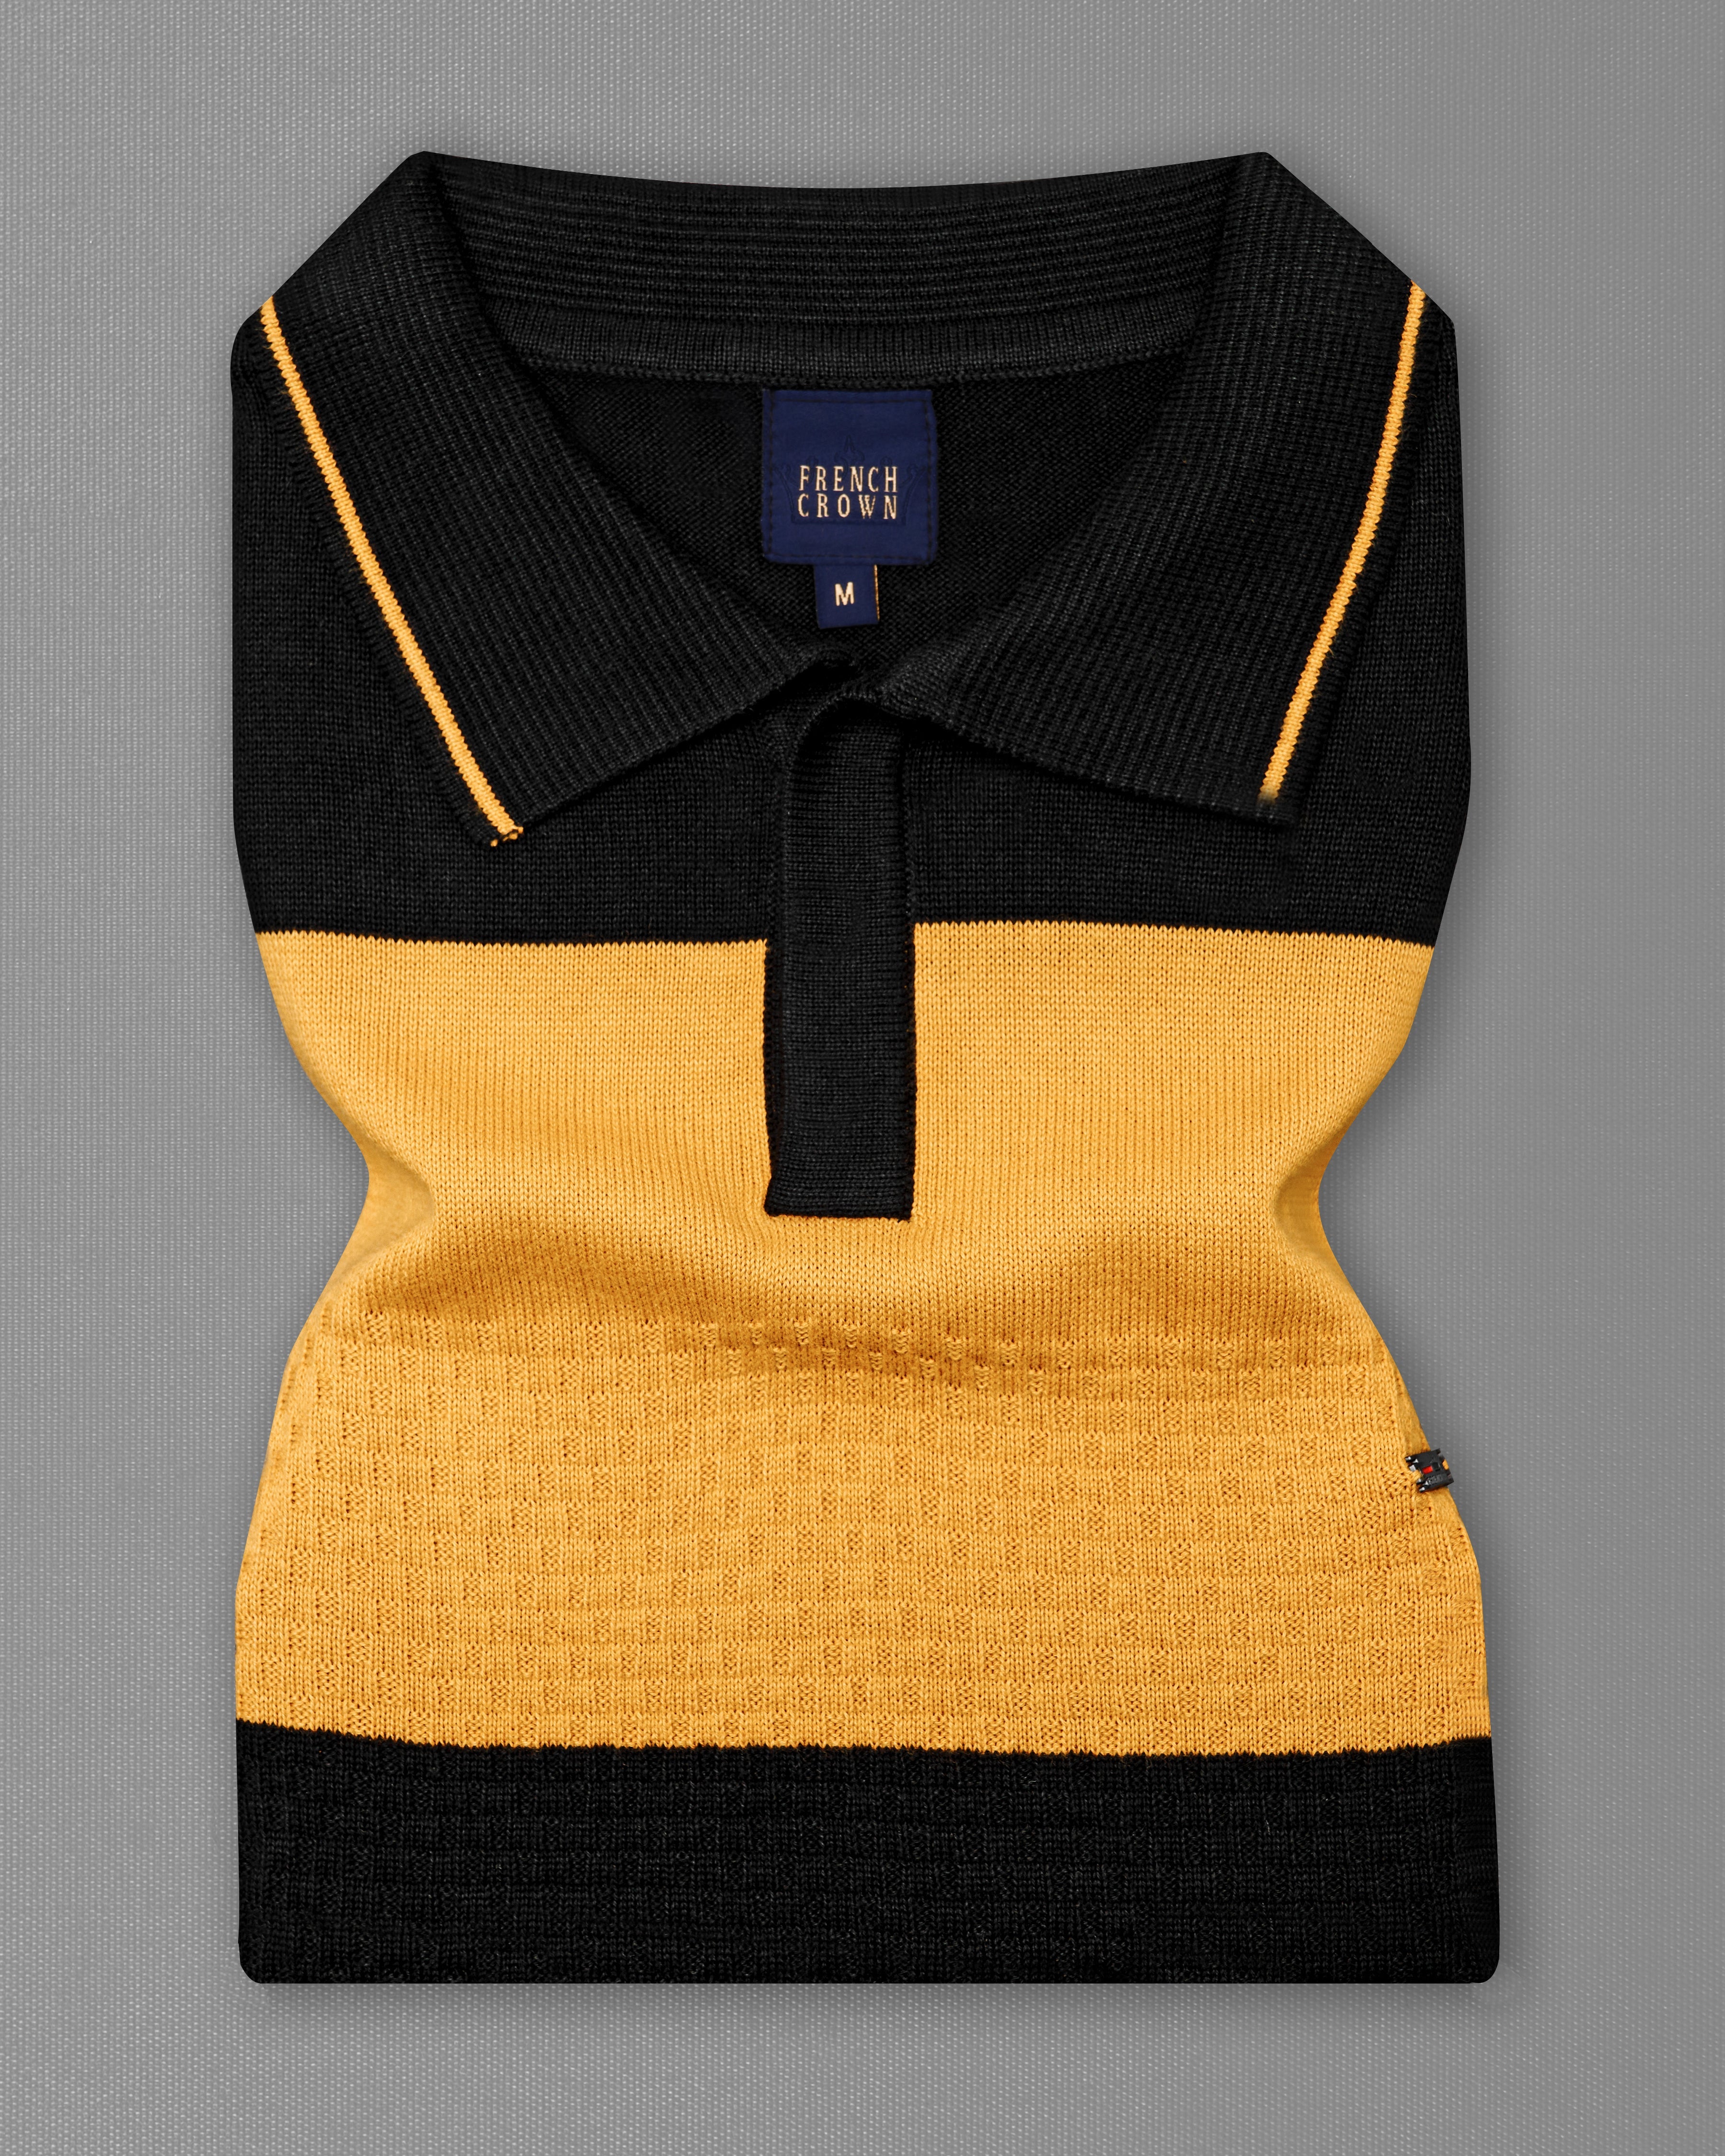 Jade Black and Butterscotch Yellow Jacquard Textured Flat-Knit Premium Cotton Polo TS872-S, TS872-M, TS872-L, TS872-XL, TS872-XXL